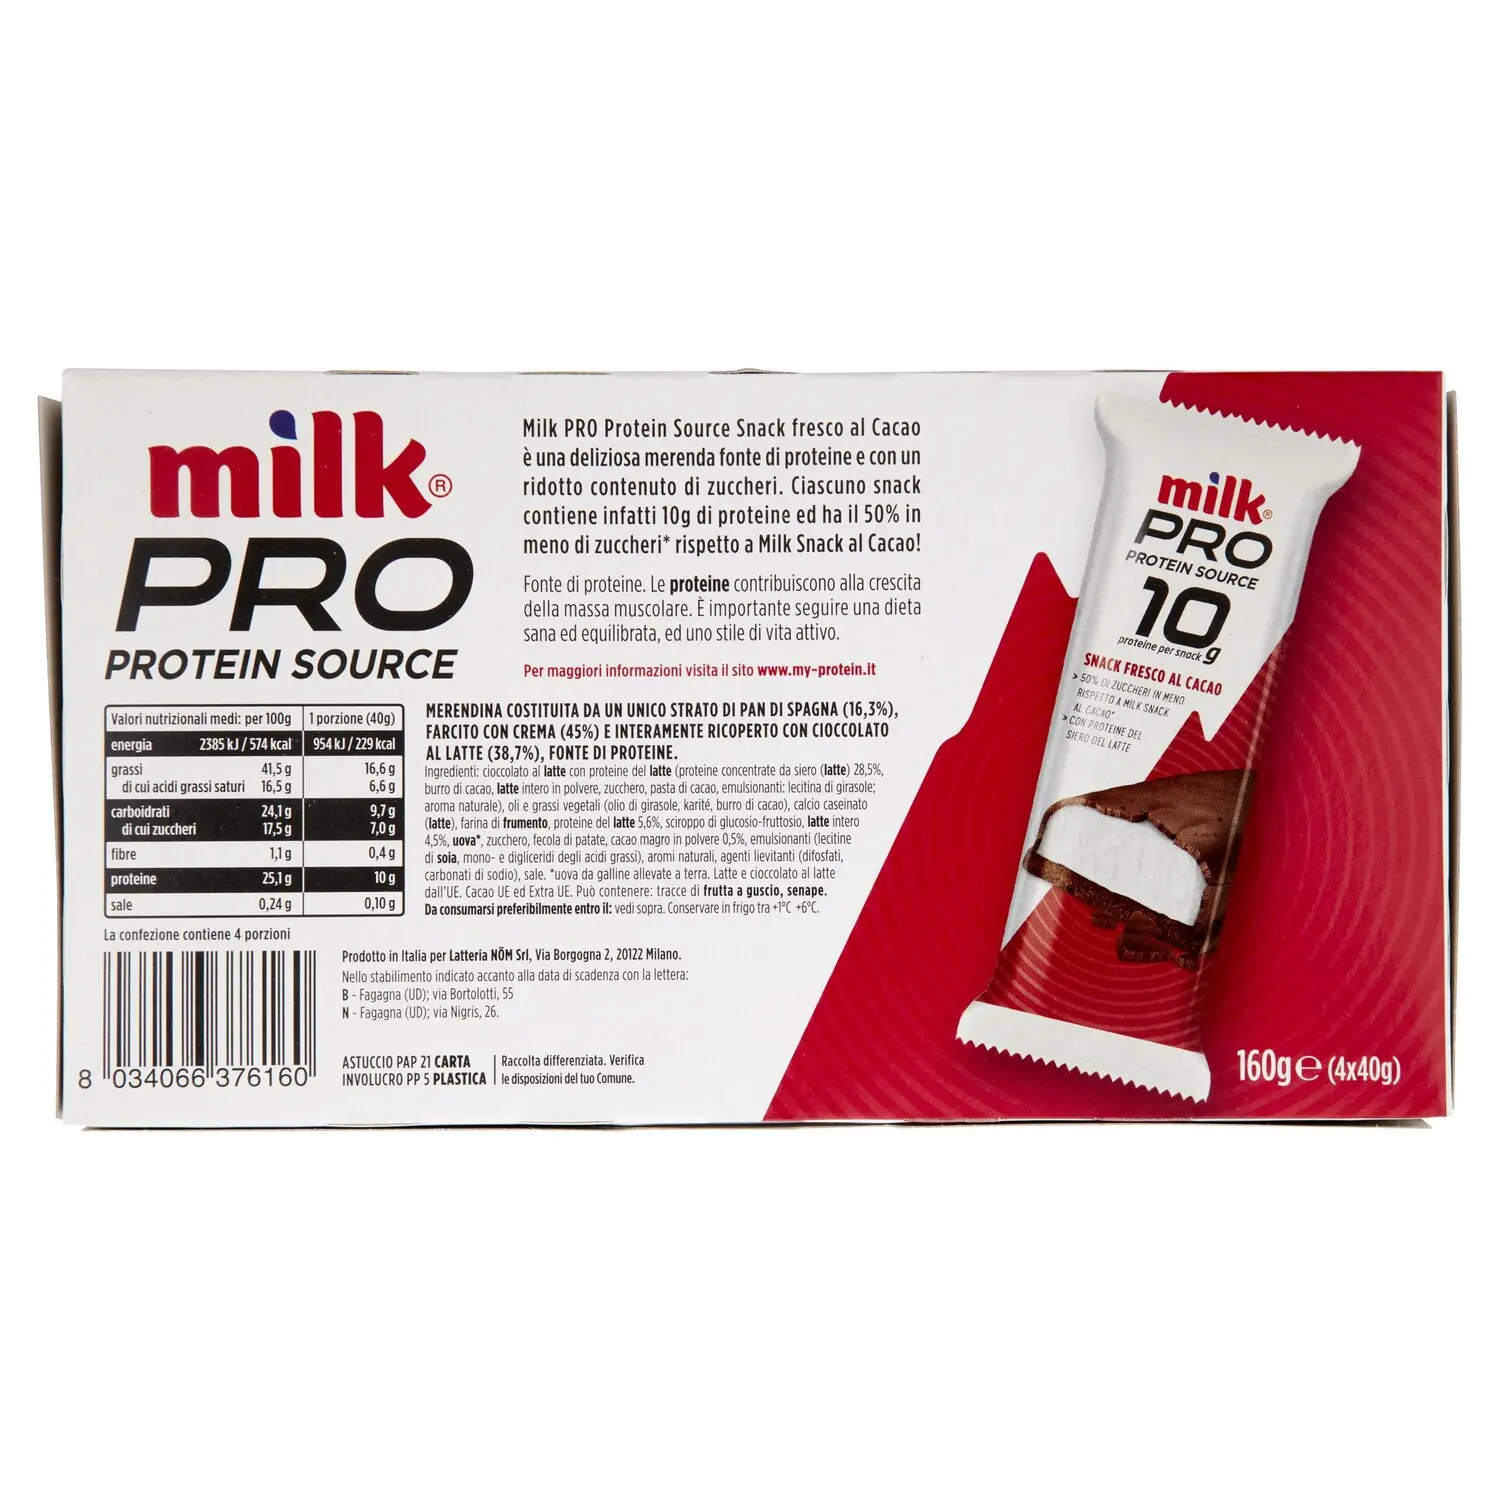 Milk Pro Protein Source 40 g Snack Fresco al Cacao 4 x 40 g